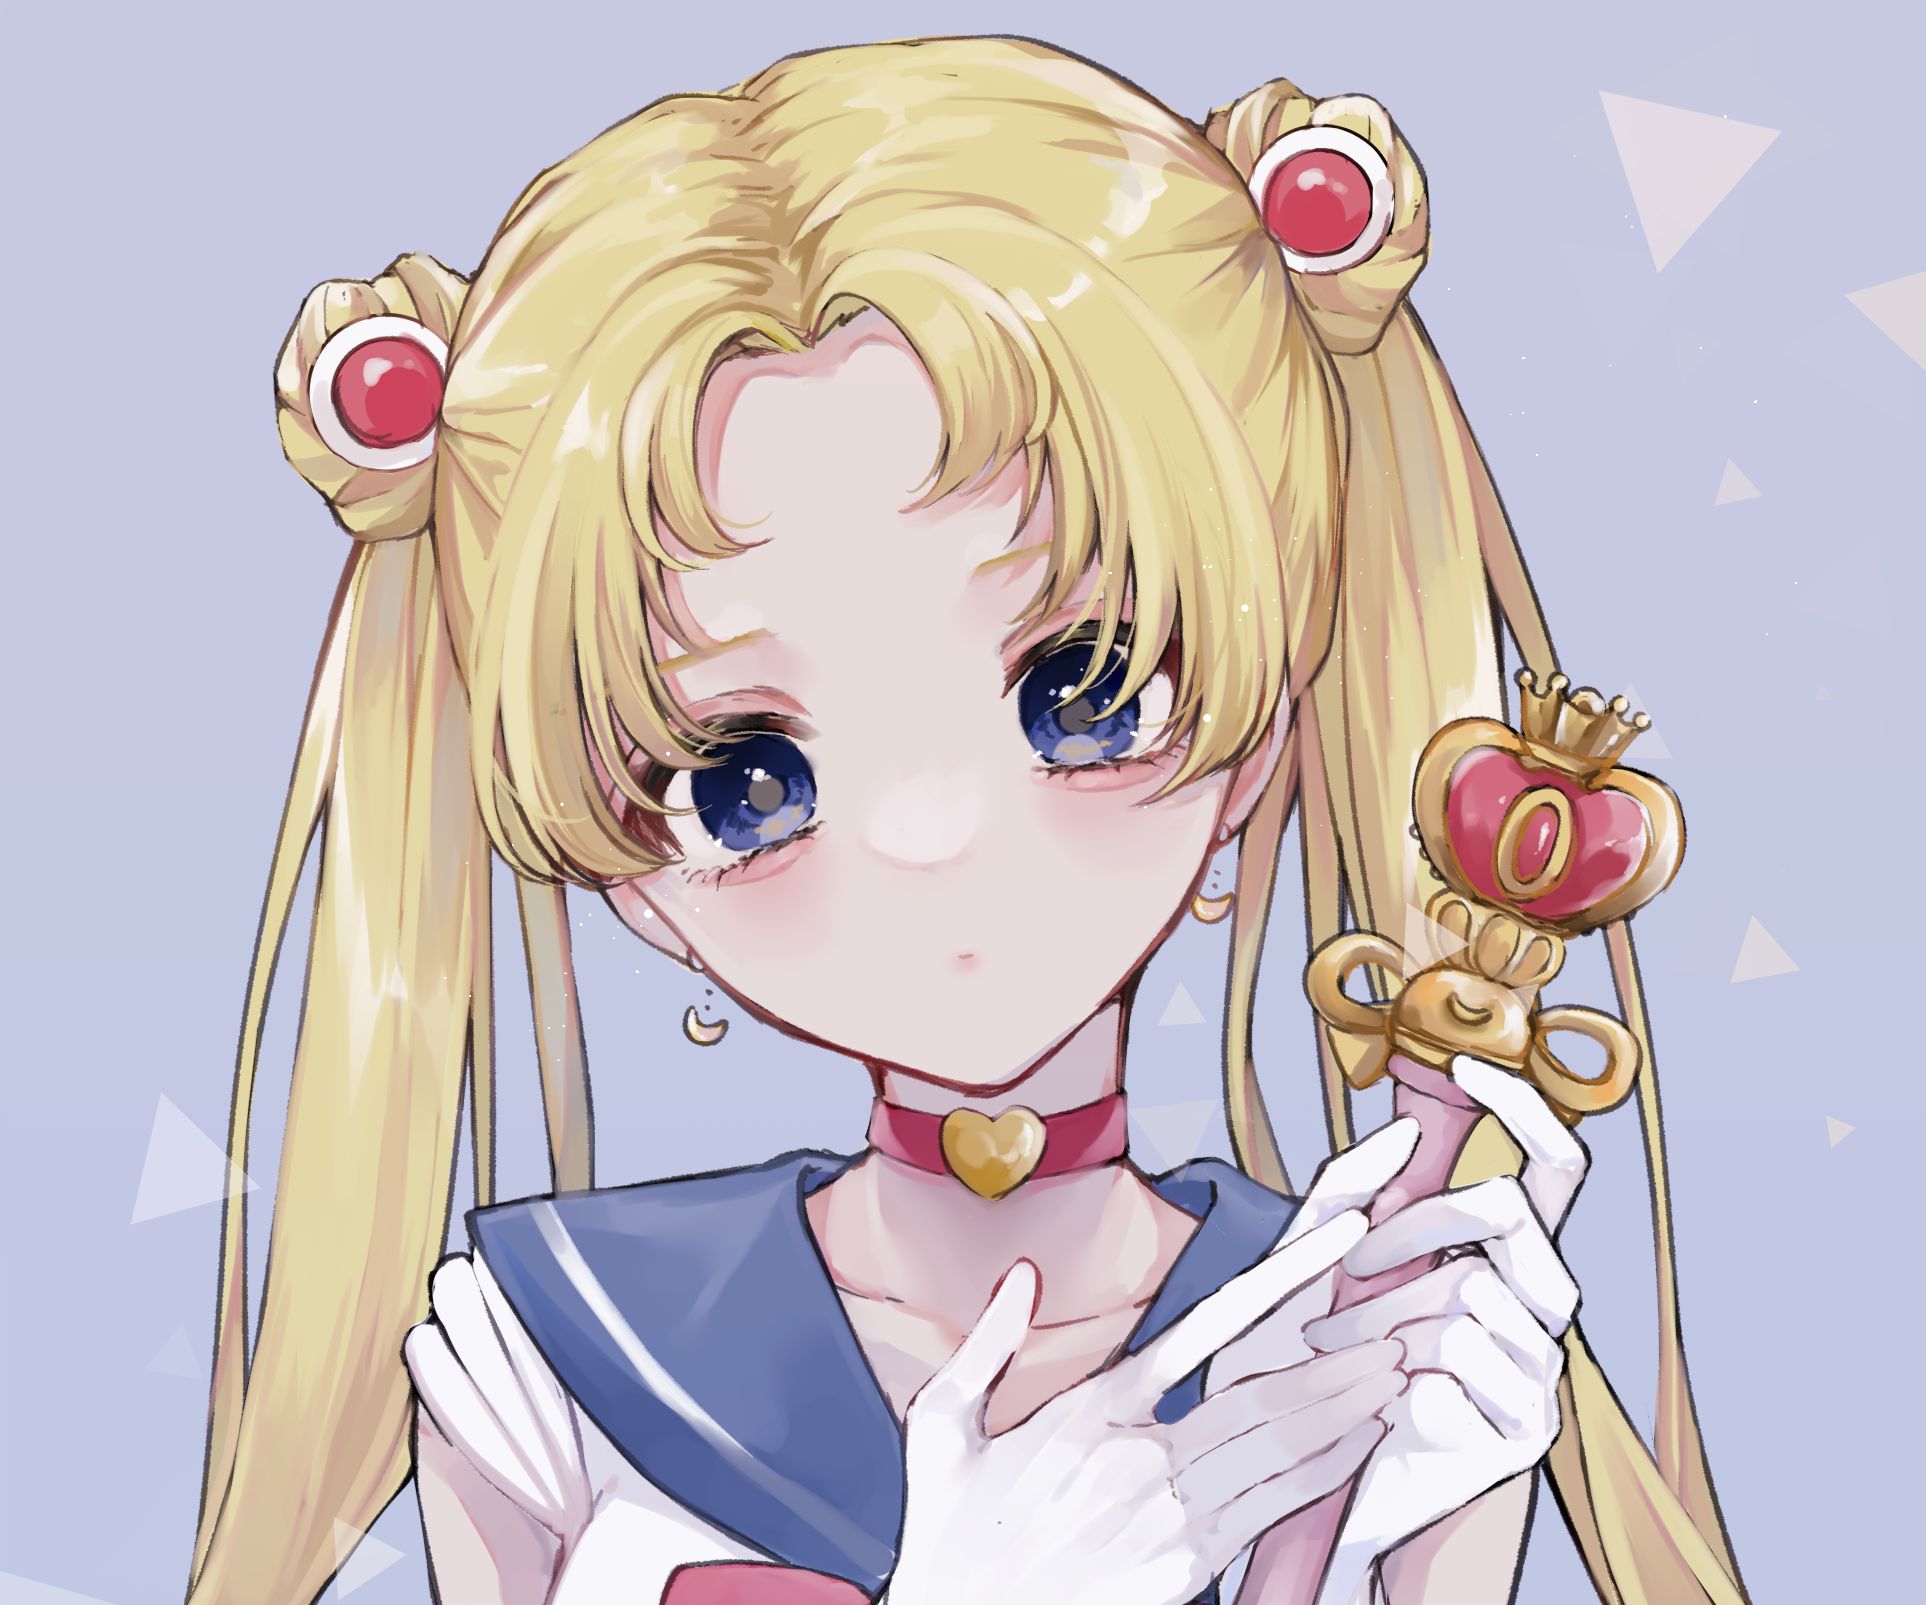 Descarga gratis la imagen Animado, Rubia, Sailor Moon Sailor Stars, Usagi Tsukino en el escritorio de tu PC